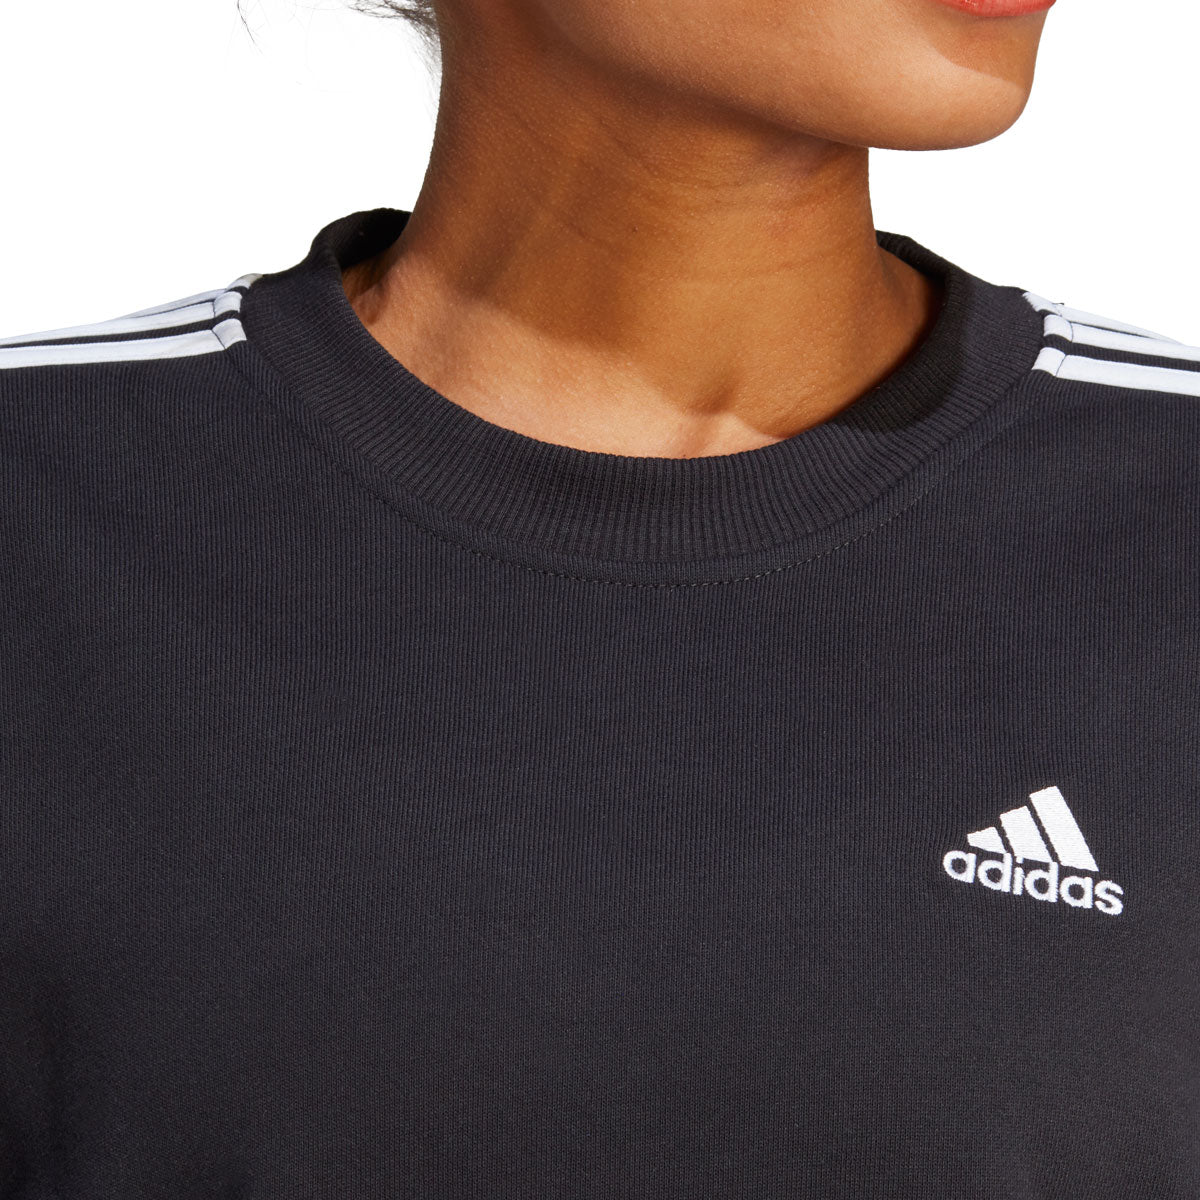 adidas Essentials 3 Stripes Sweatshirt - Womens - Black/White